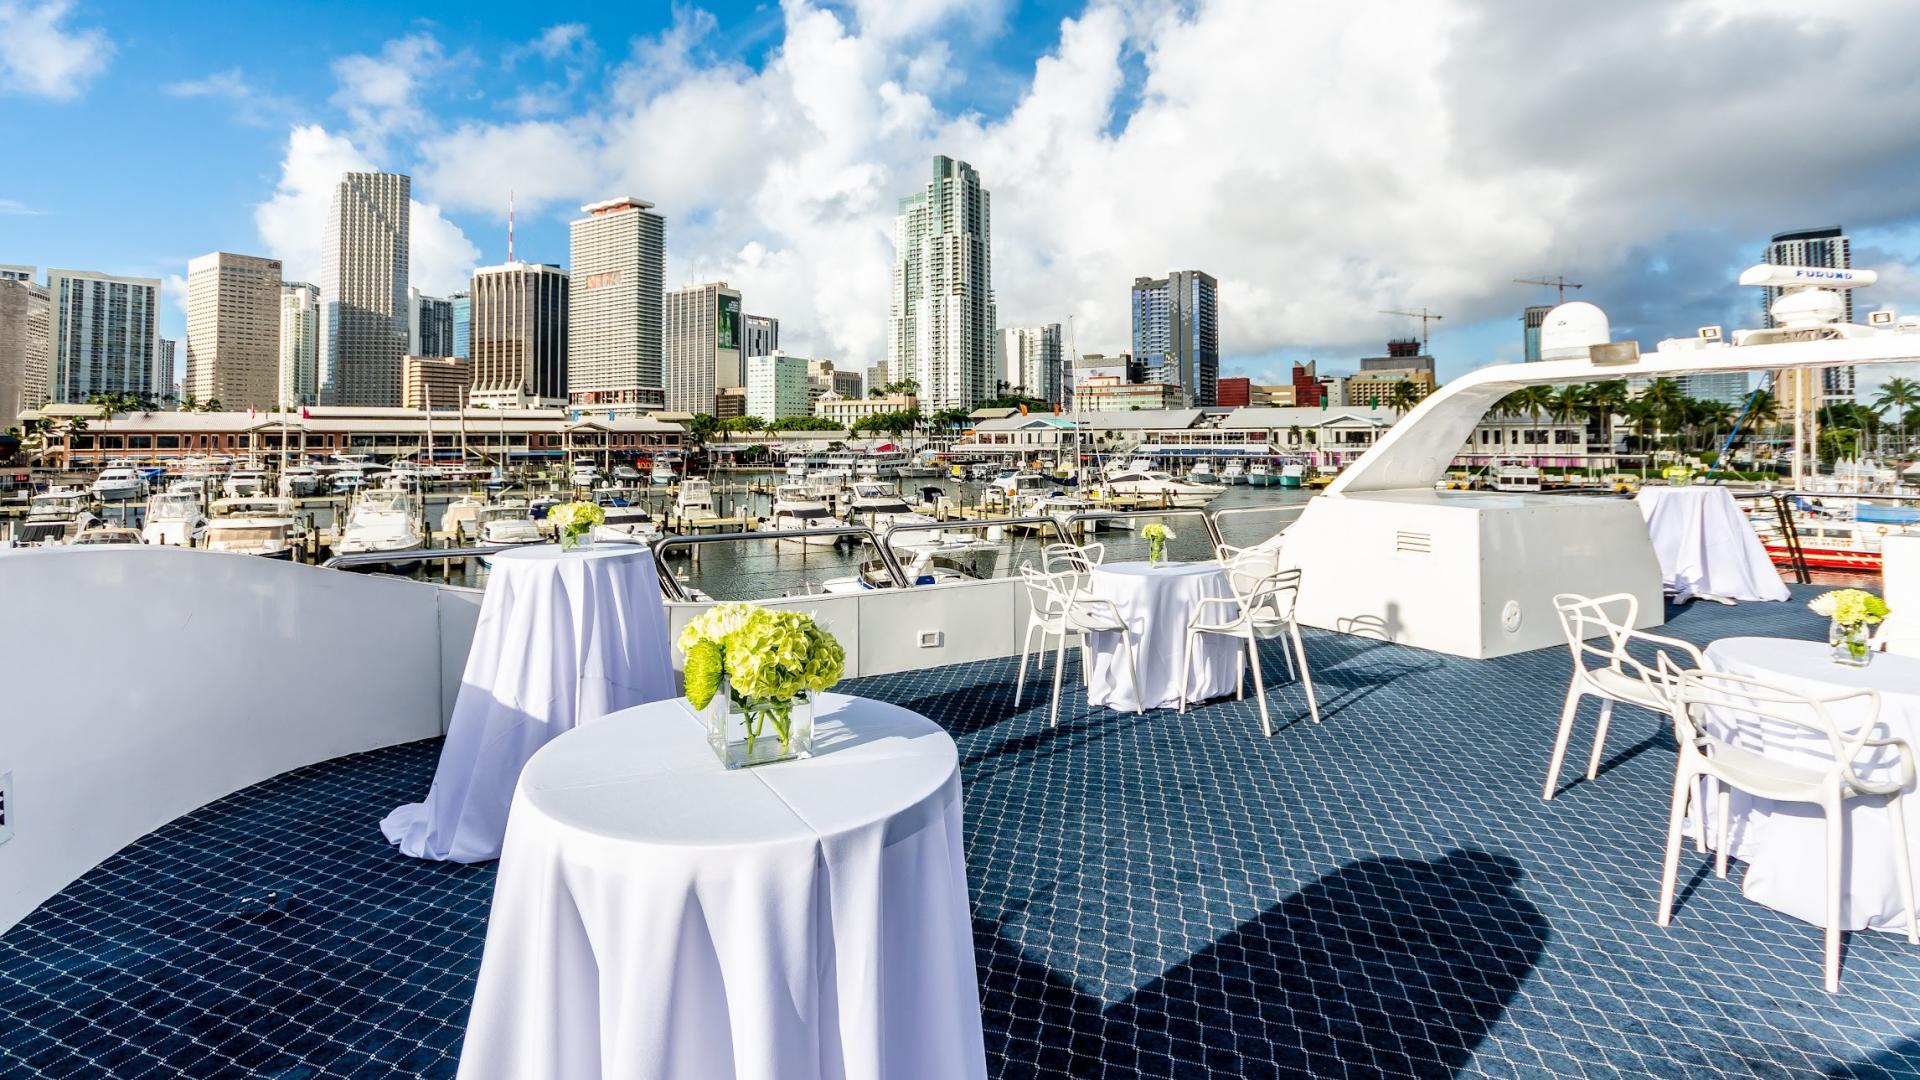 Outdoor Wedding Venues for Rent in Miami, FL